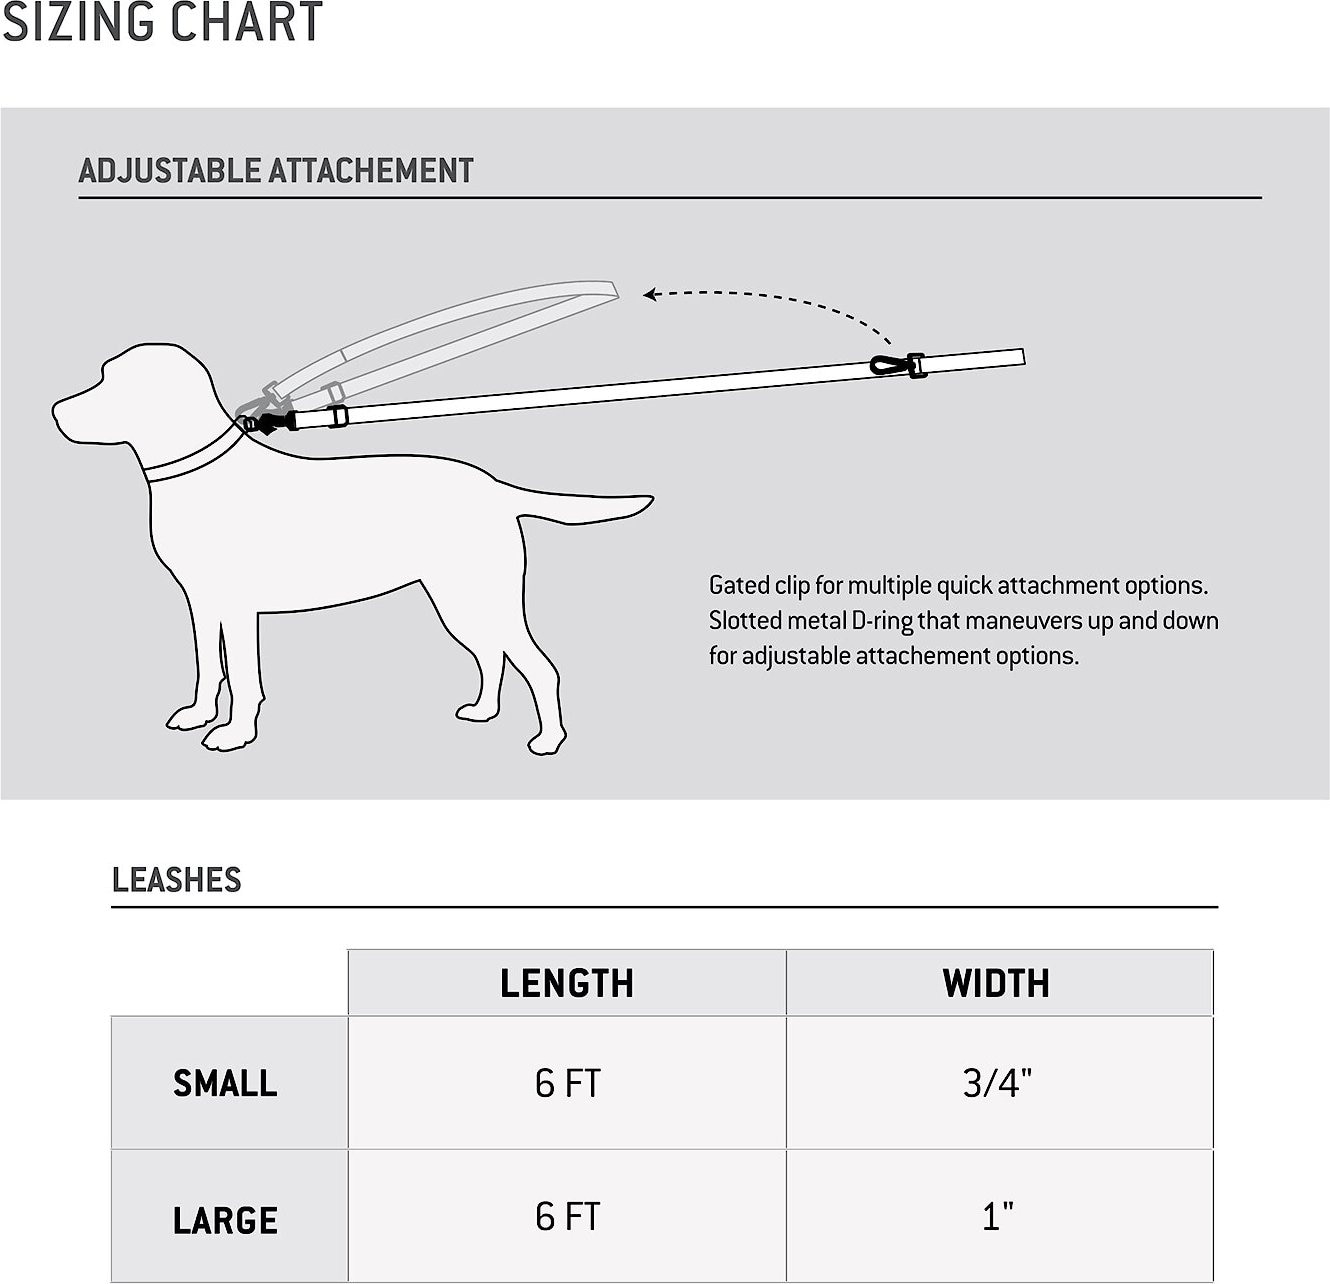 Carhartt Dog Coat Size Chart